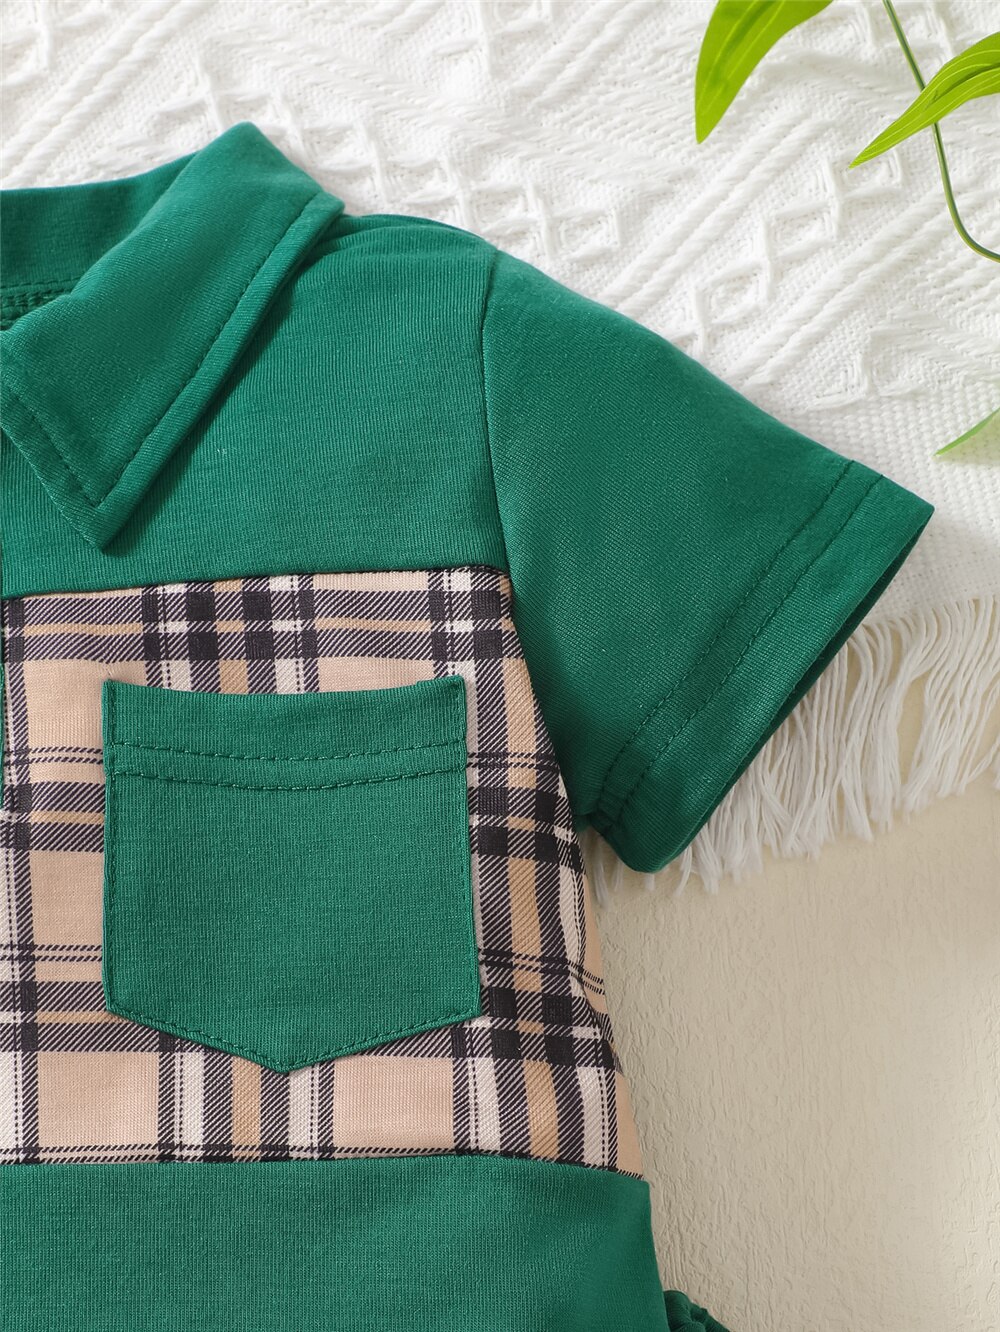 3-24Months-Infant-Baby-Boy-Clothing-Set-Short-Sleeves-Green-T-shirt-Shorts-2PCS-Costume-Newborn-3